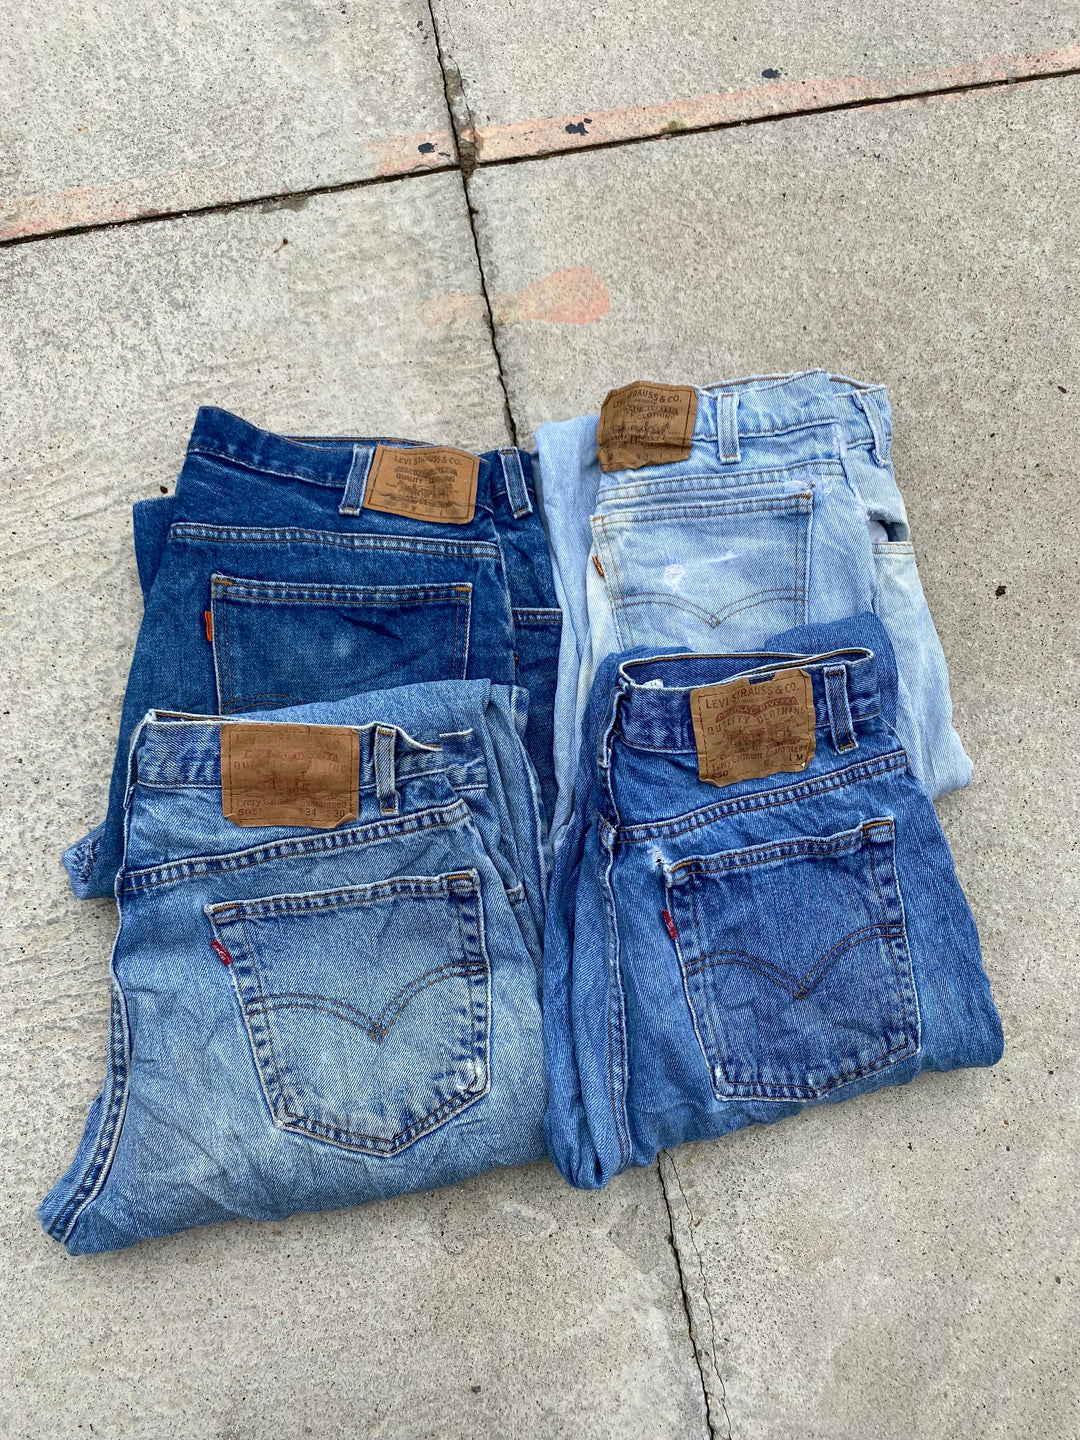 10 x 90's Style Levi's Jeans